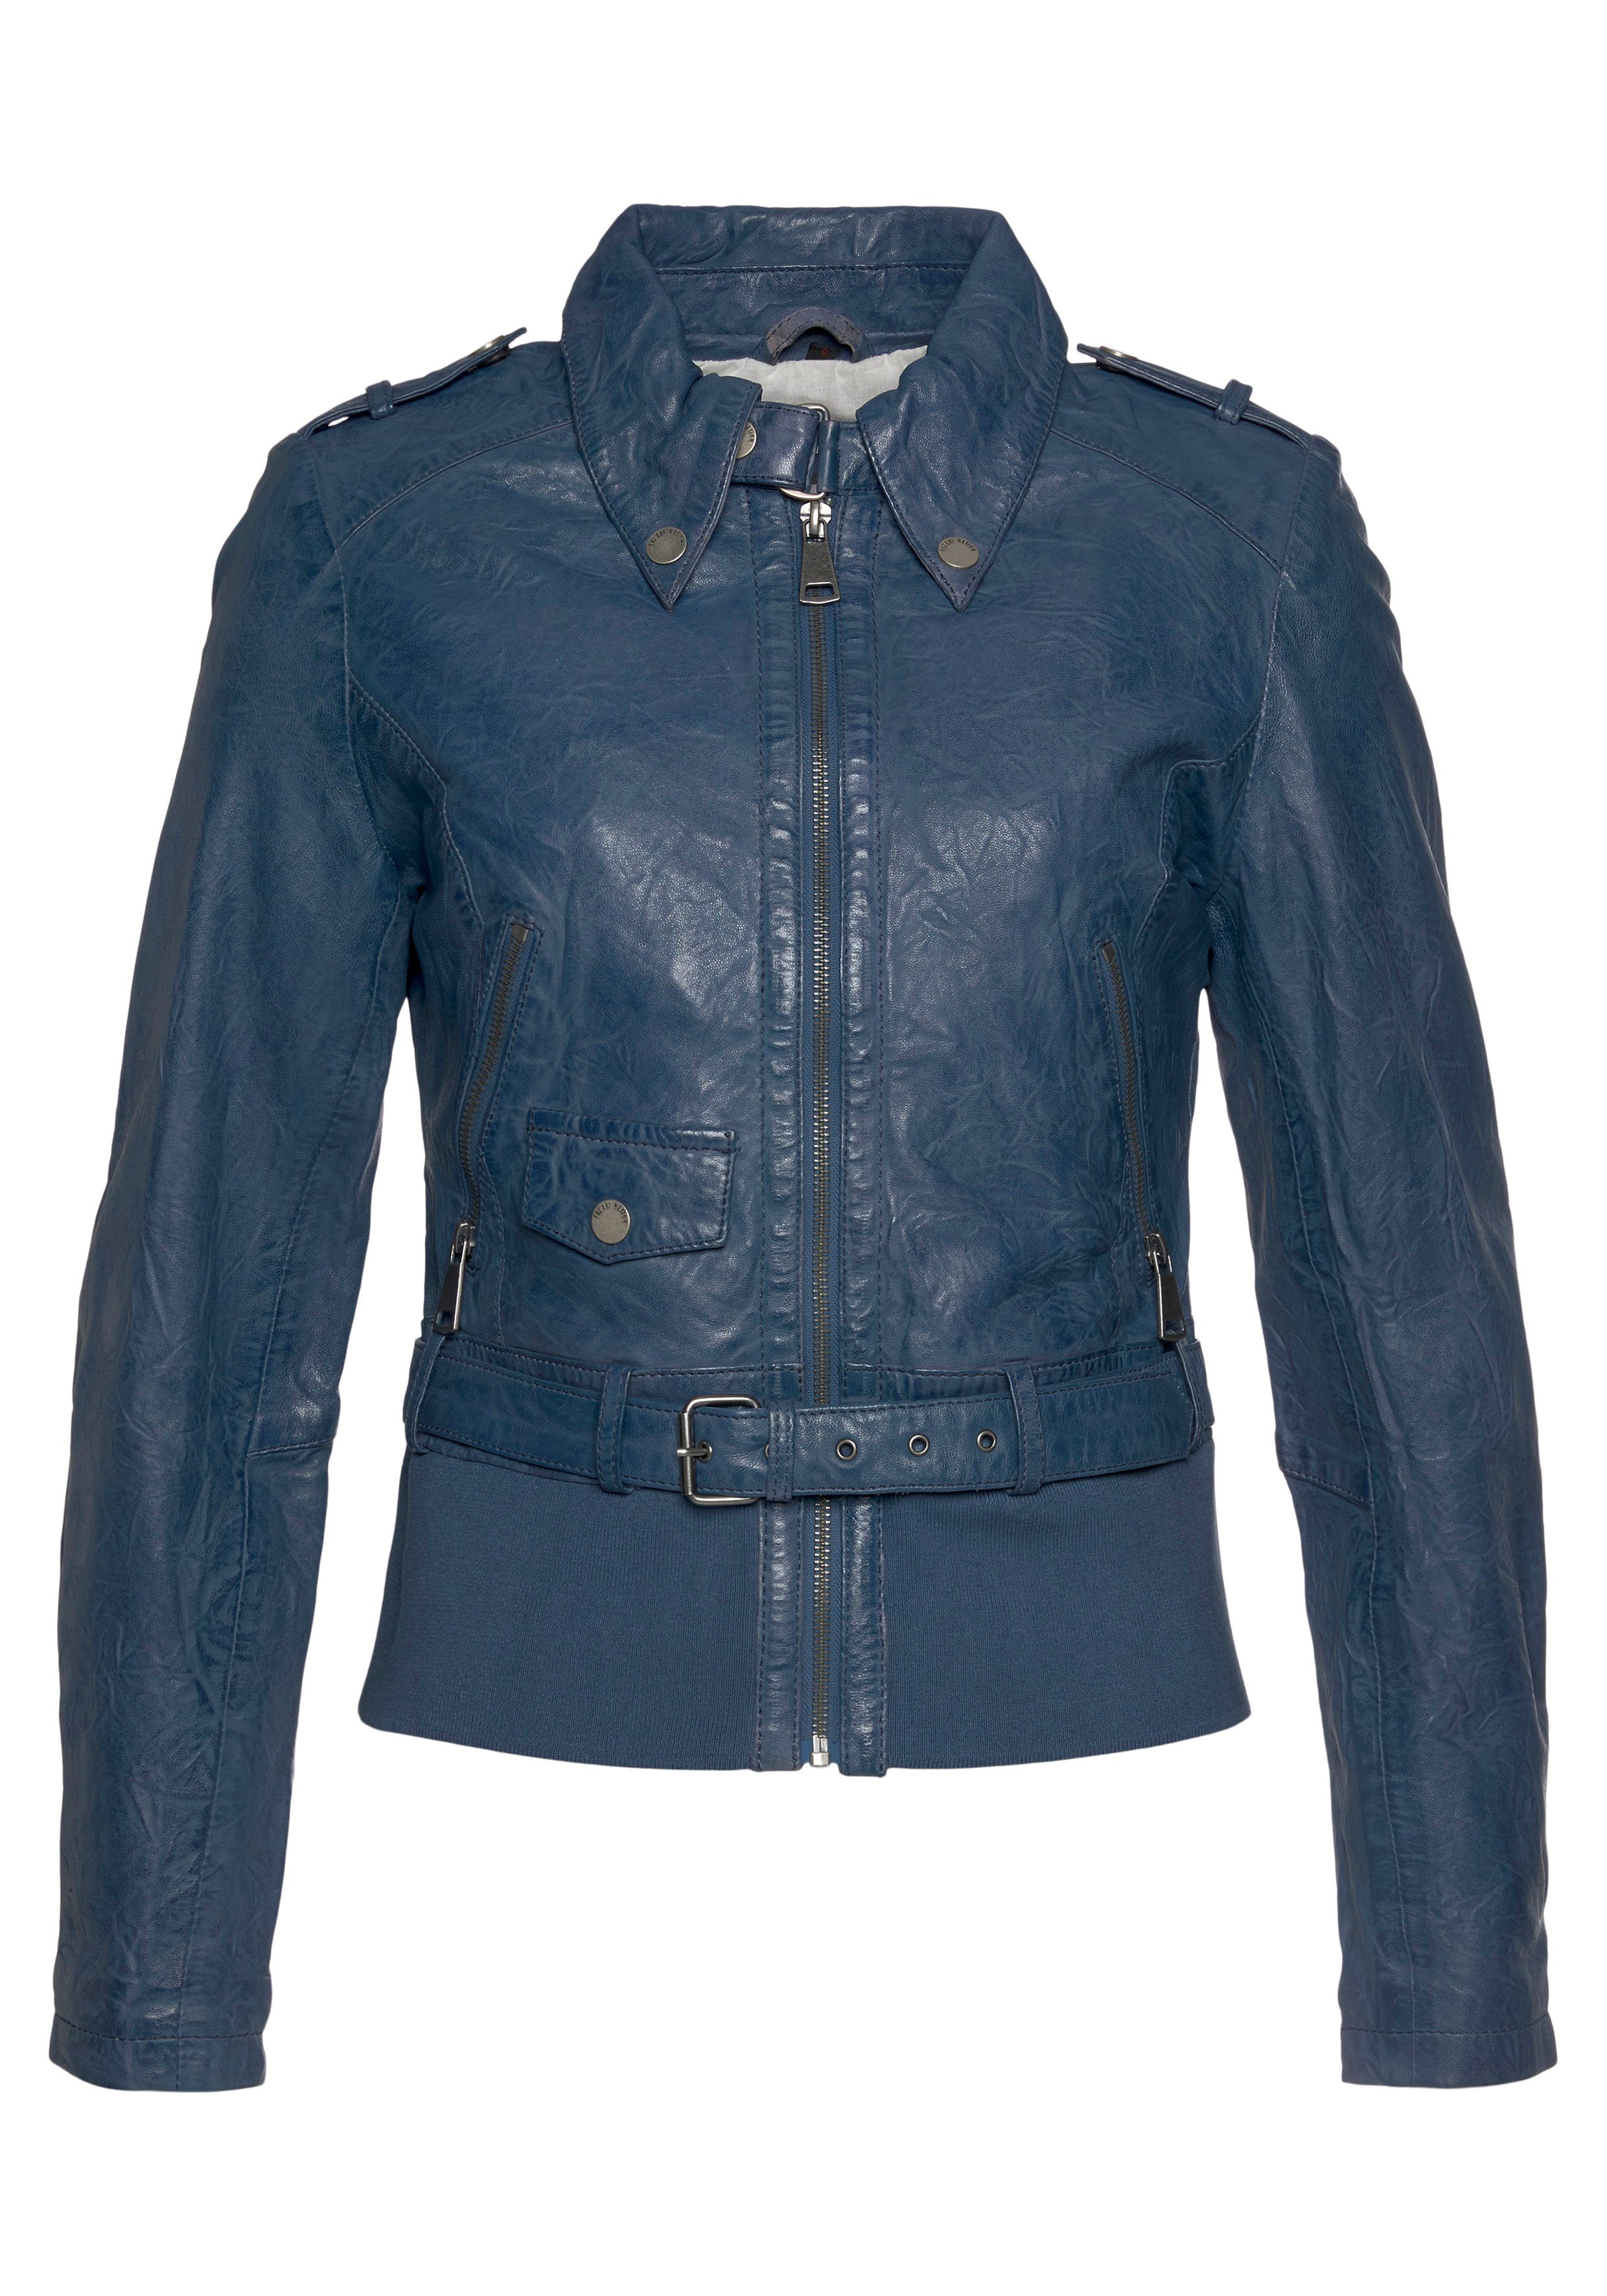 Damen Lederjacke in blau online kaufen | OTTO